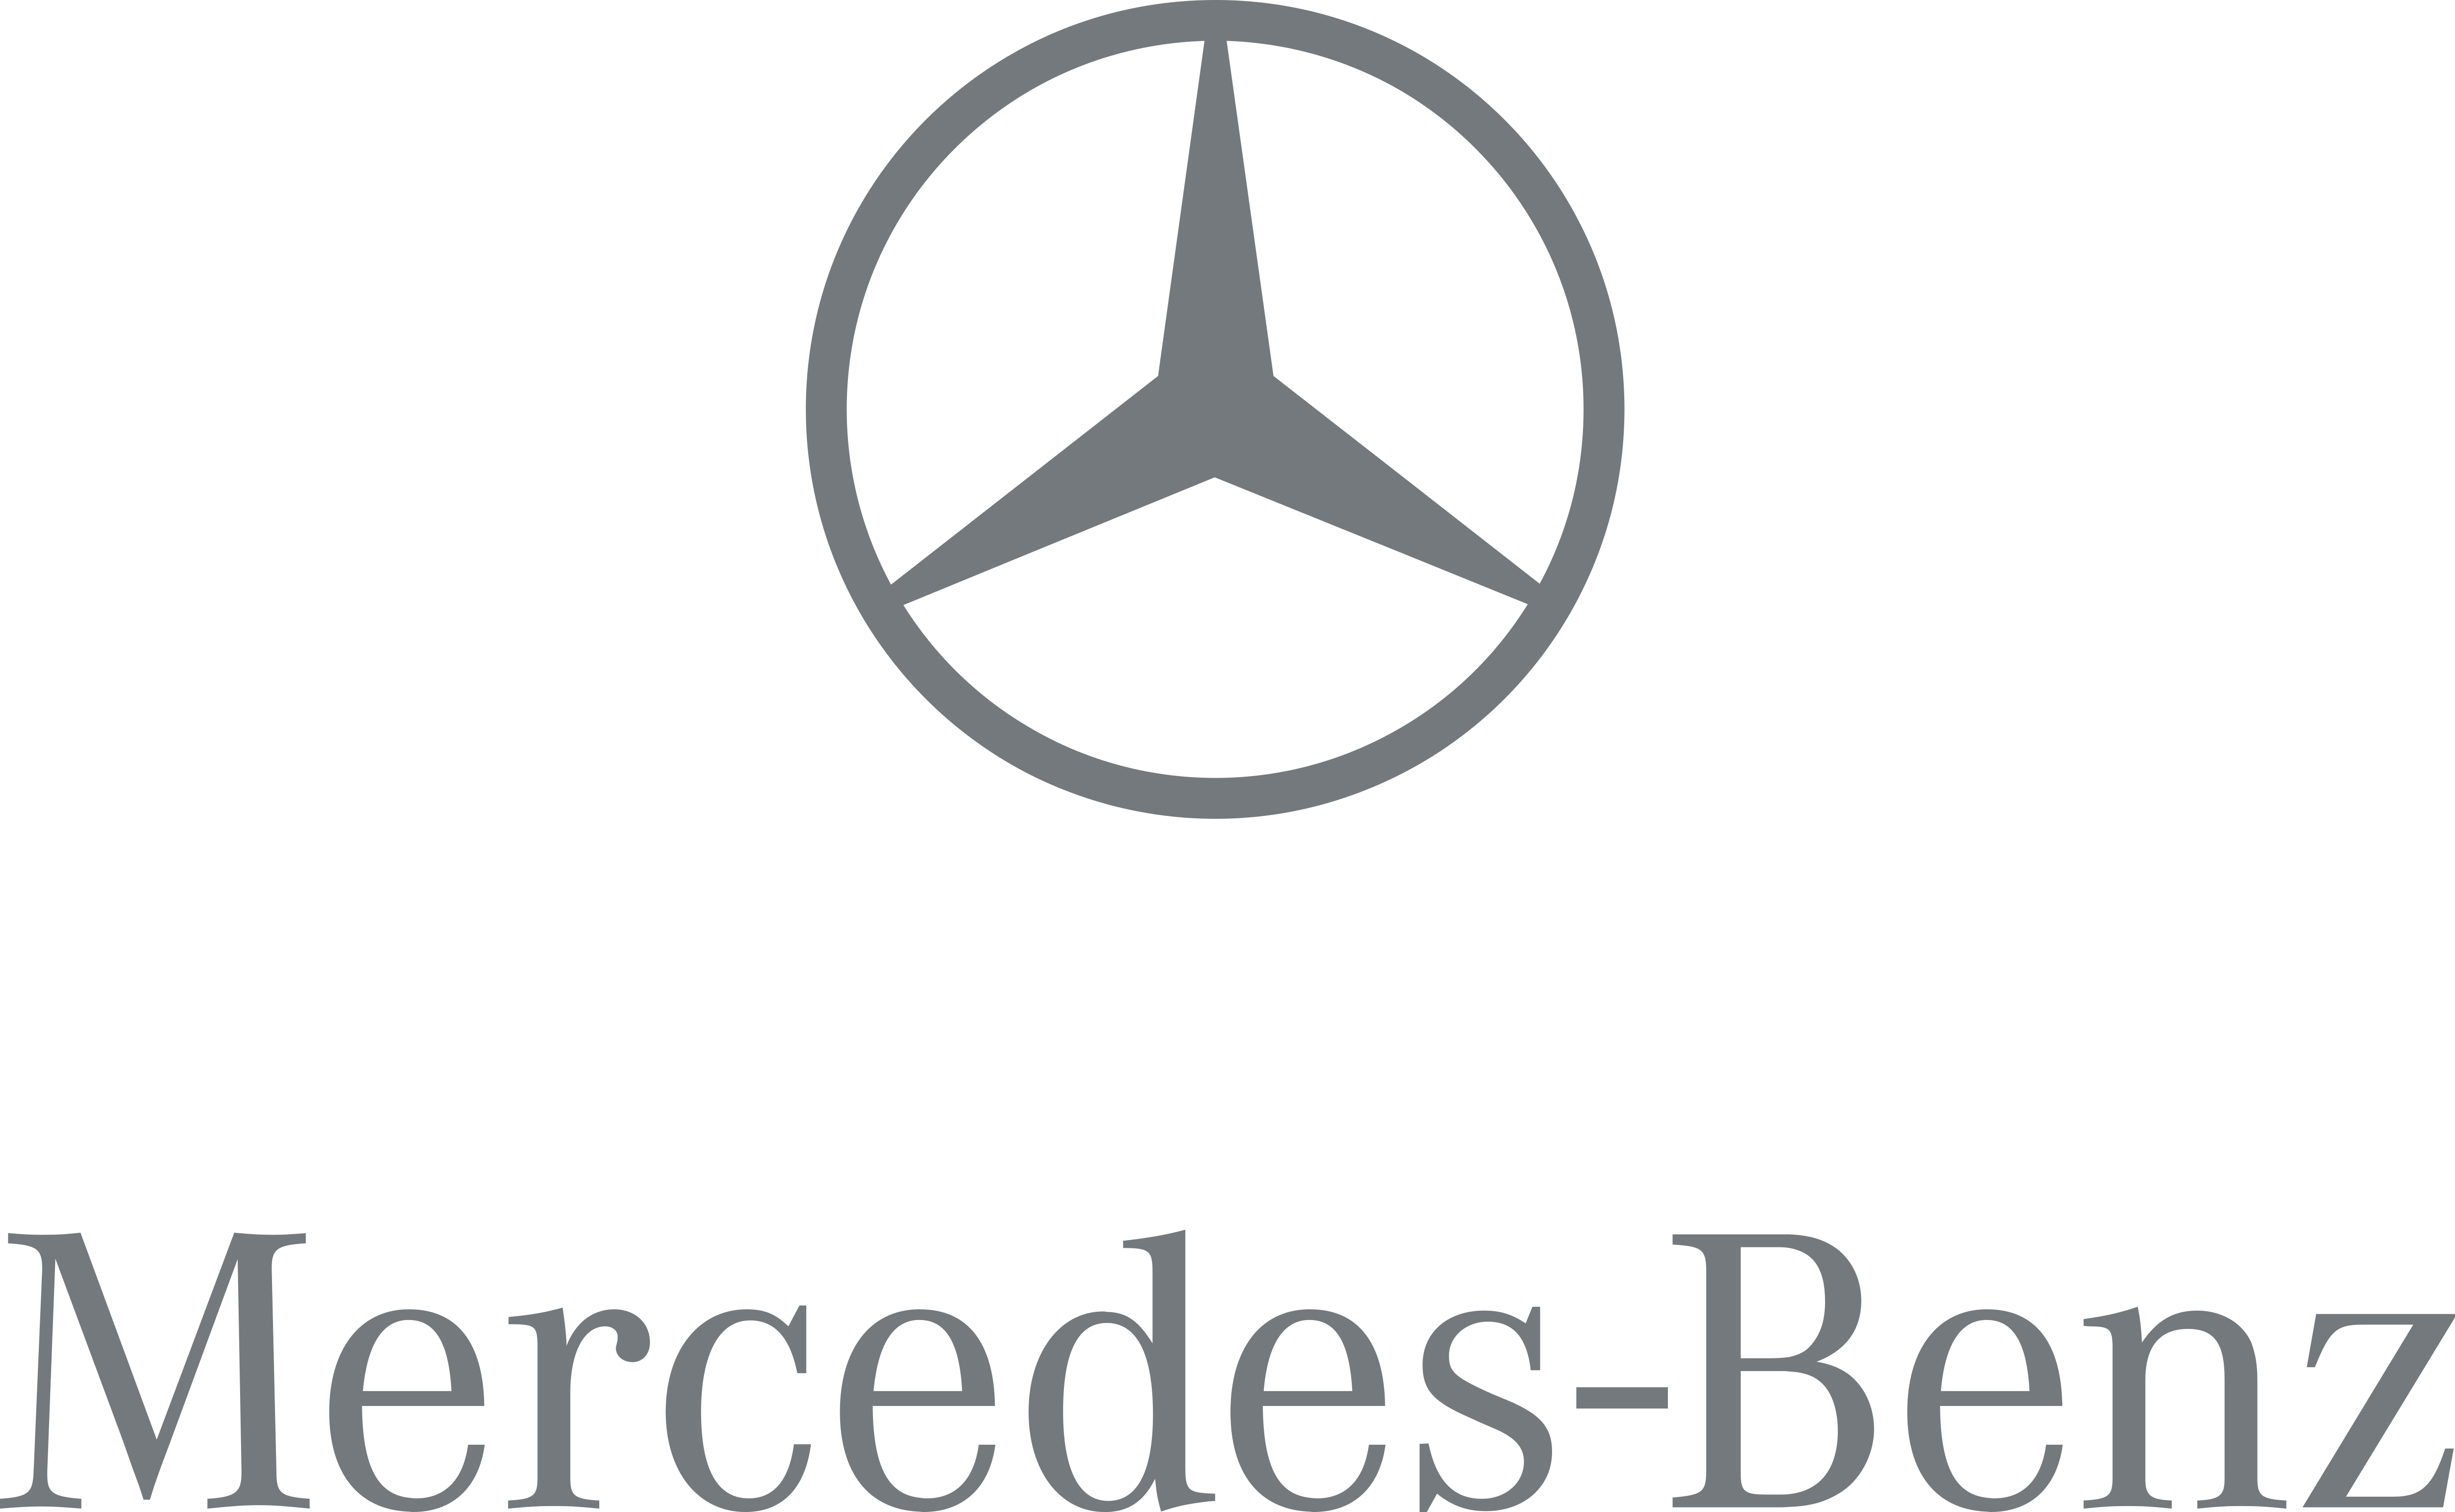 protektor Skulptur Bane Mercedes-Benz – Logos Download